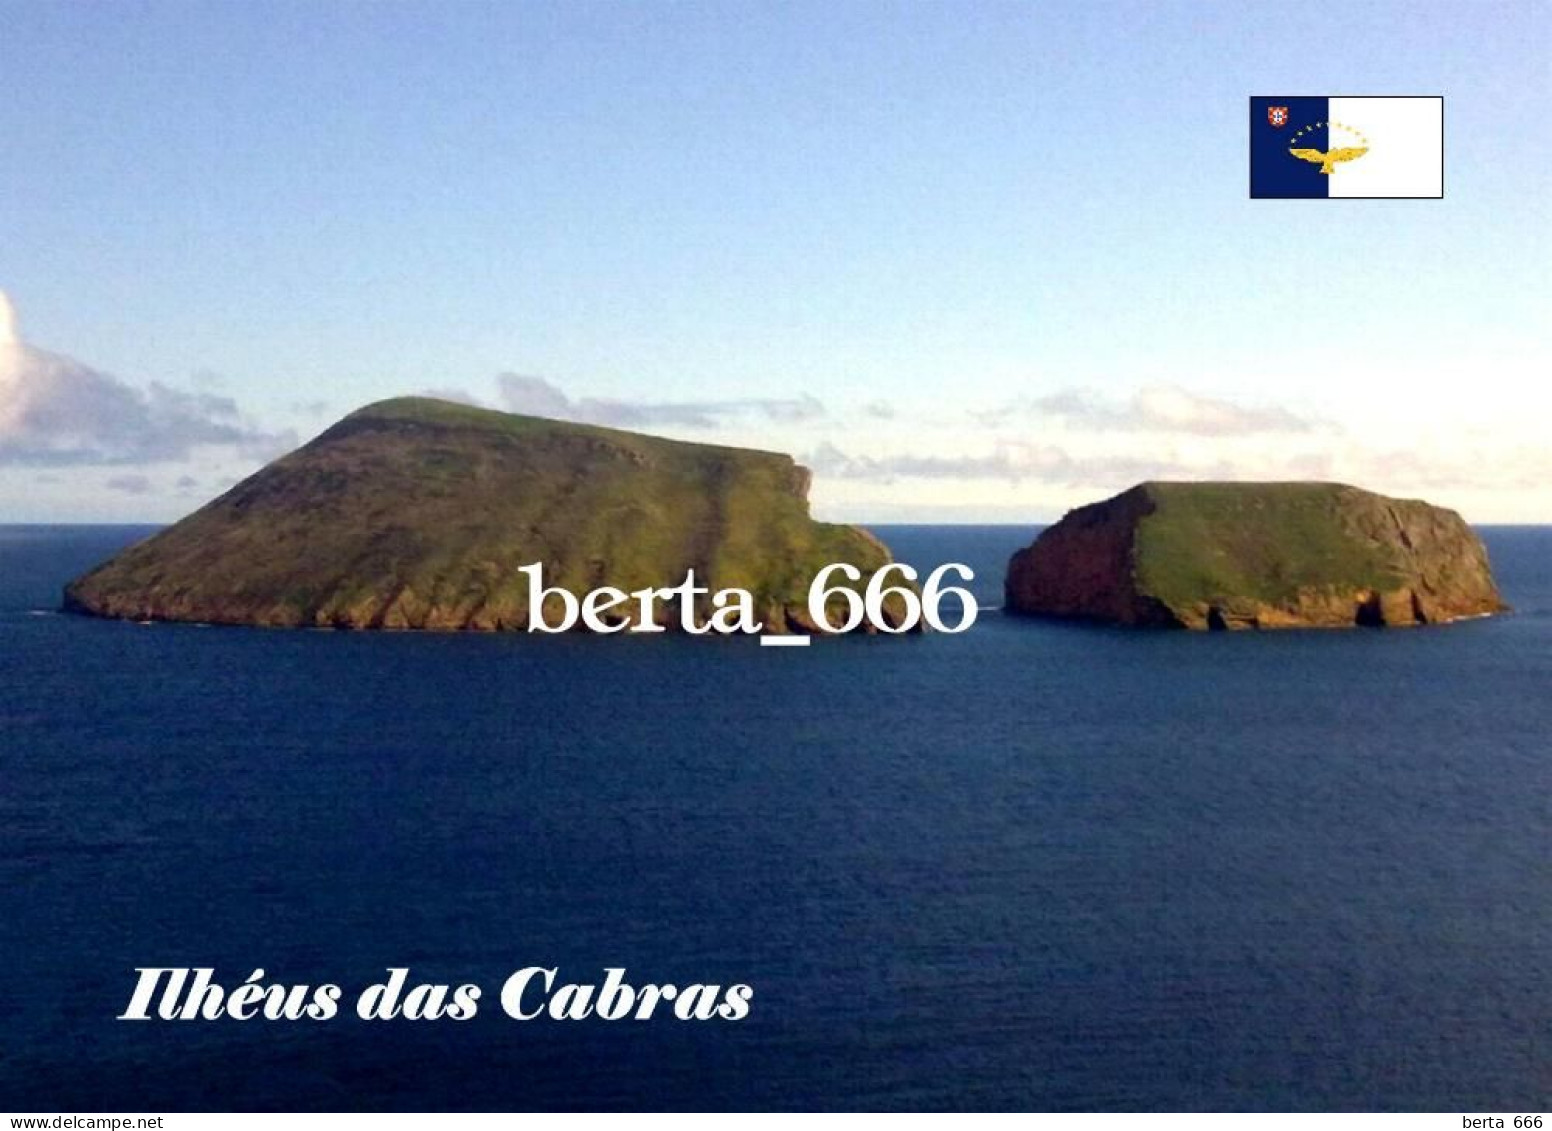 Portugal Azores Cabras Islets New Postcard - Açores